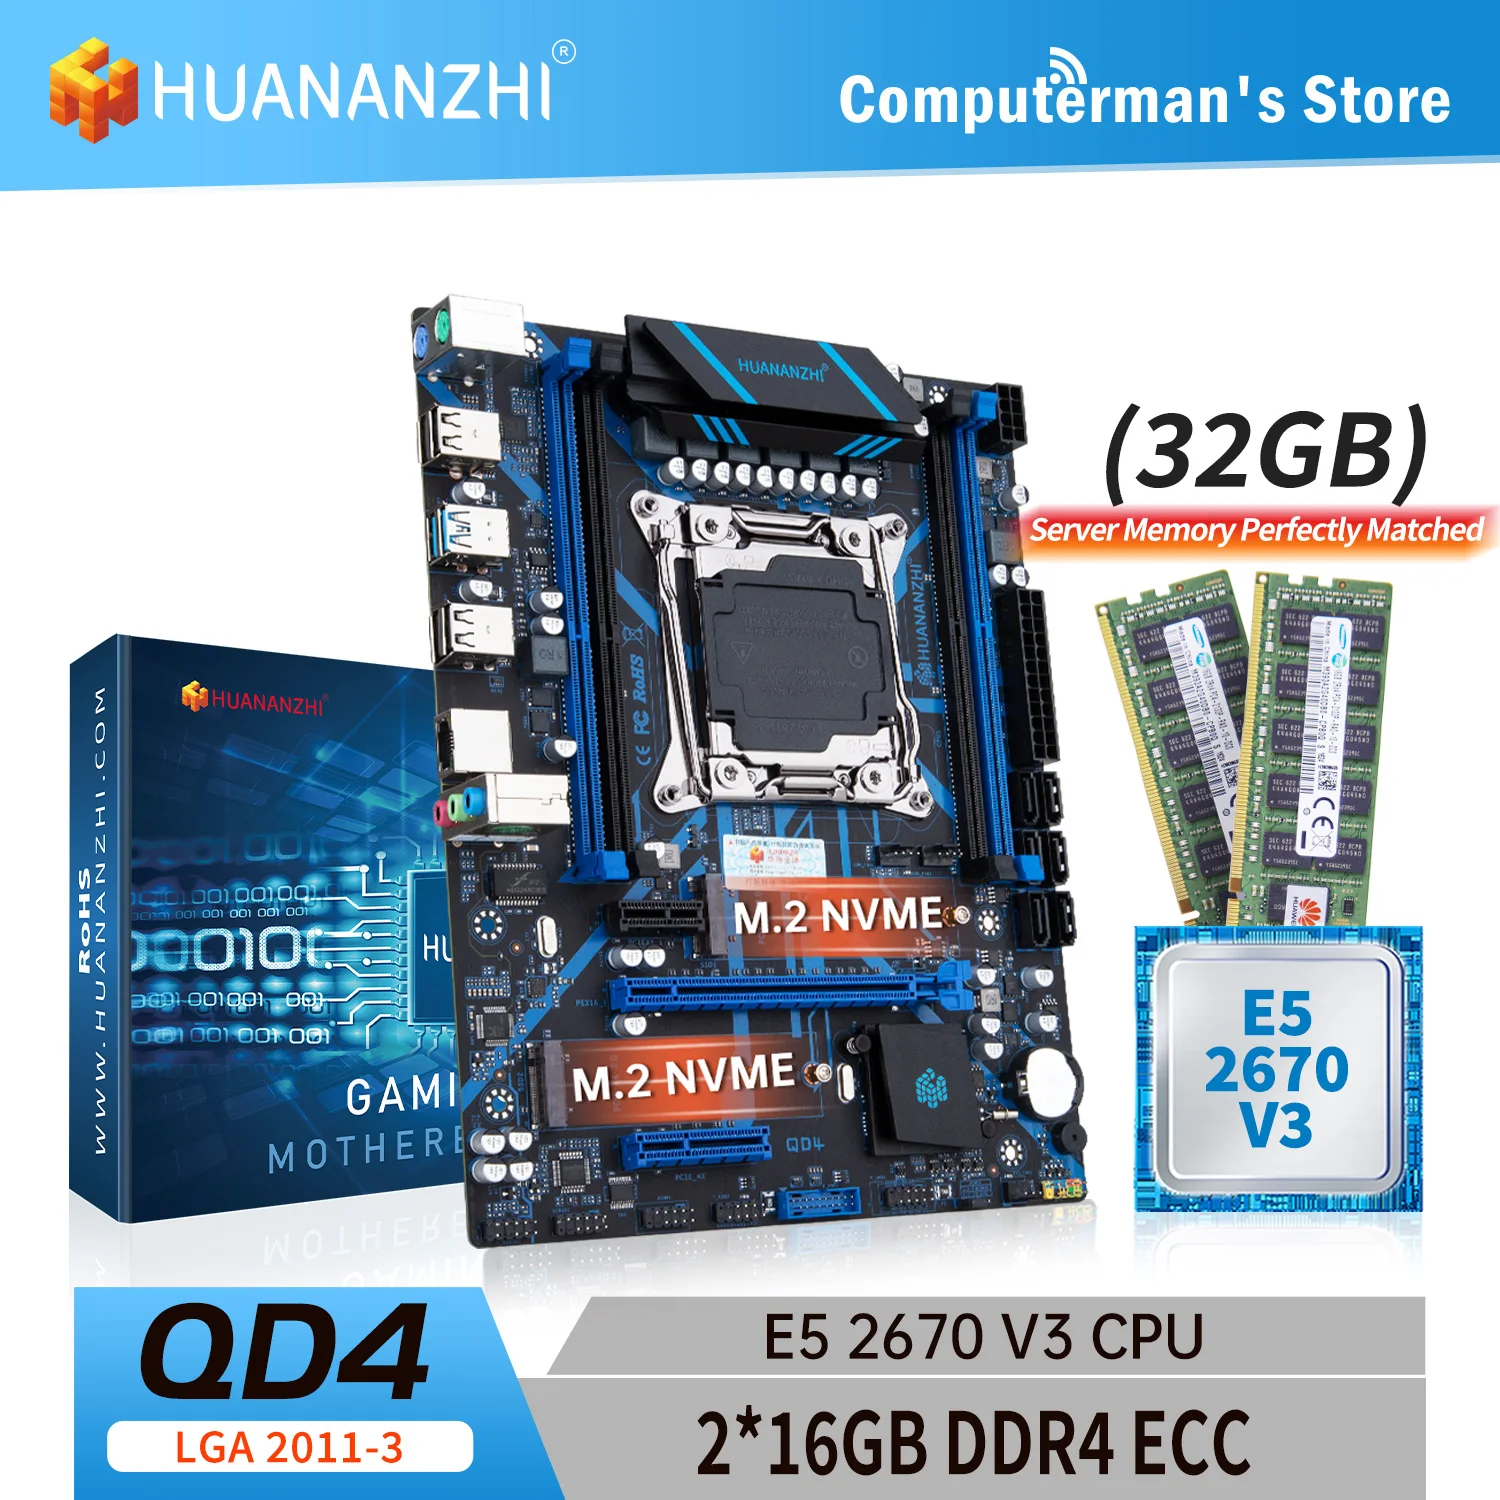 

HUANANZHI X99 QD4 LGA 2011-3 XEON X99 материнская плата с Intel E5 2670 v3 с 2*16G DDR4 RECC память комбинированный комплект NVME SATA